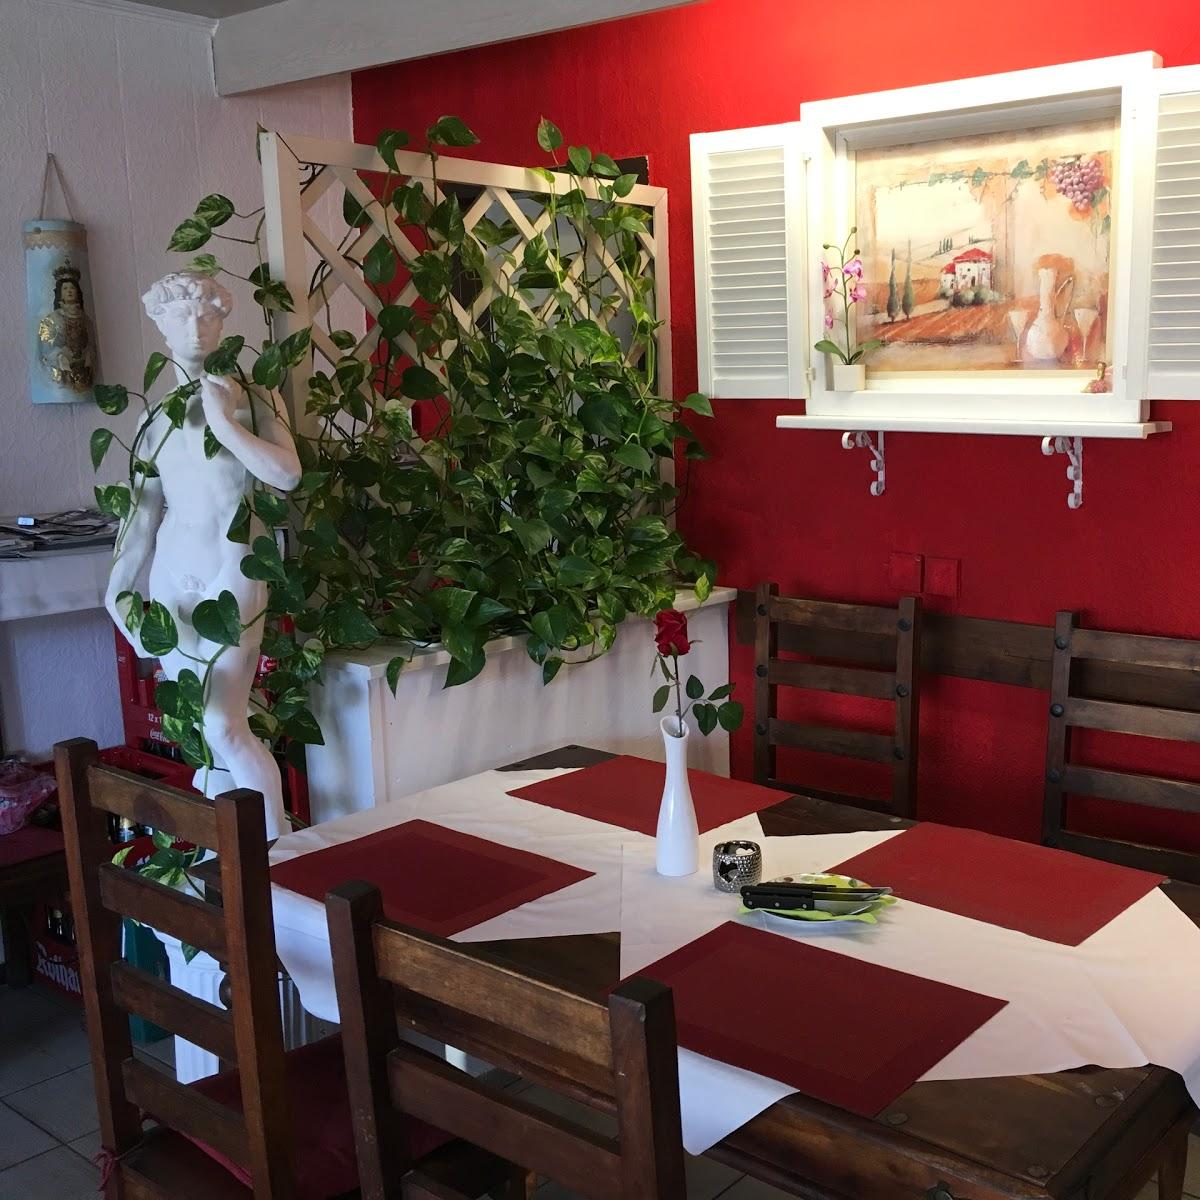 Restaurant "Imbiss - Pizzeria Toscana" in Kronau